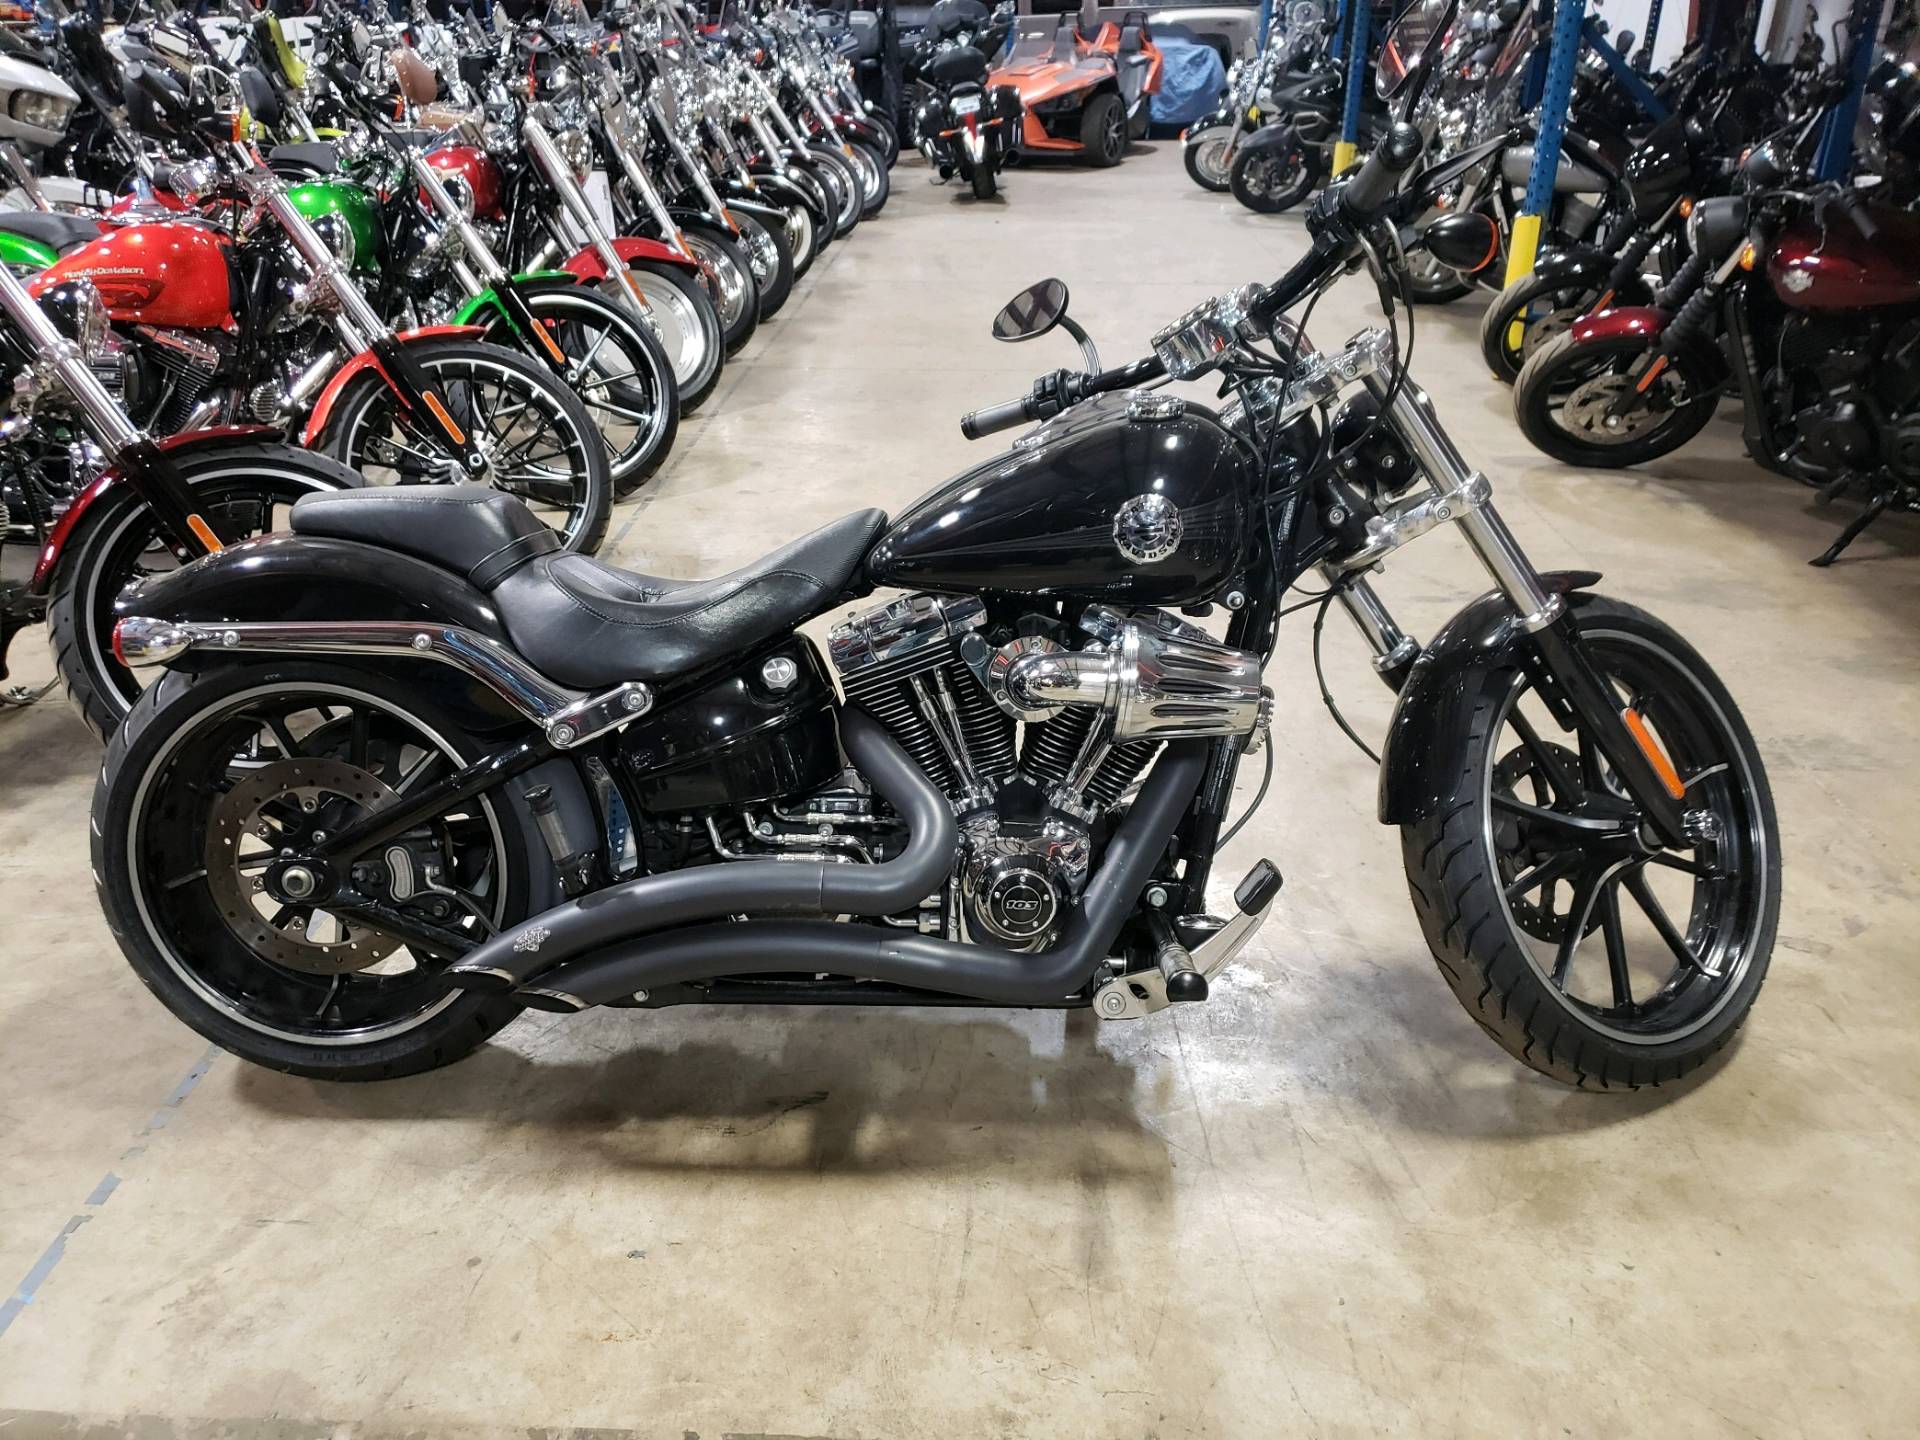 2014 Harley Davidson Breakout For Sale Monroe Mi 8315